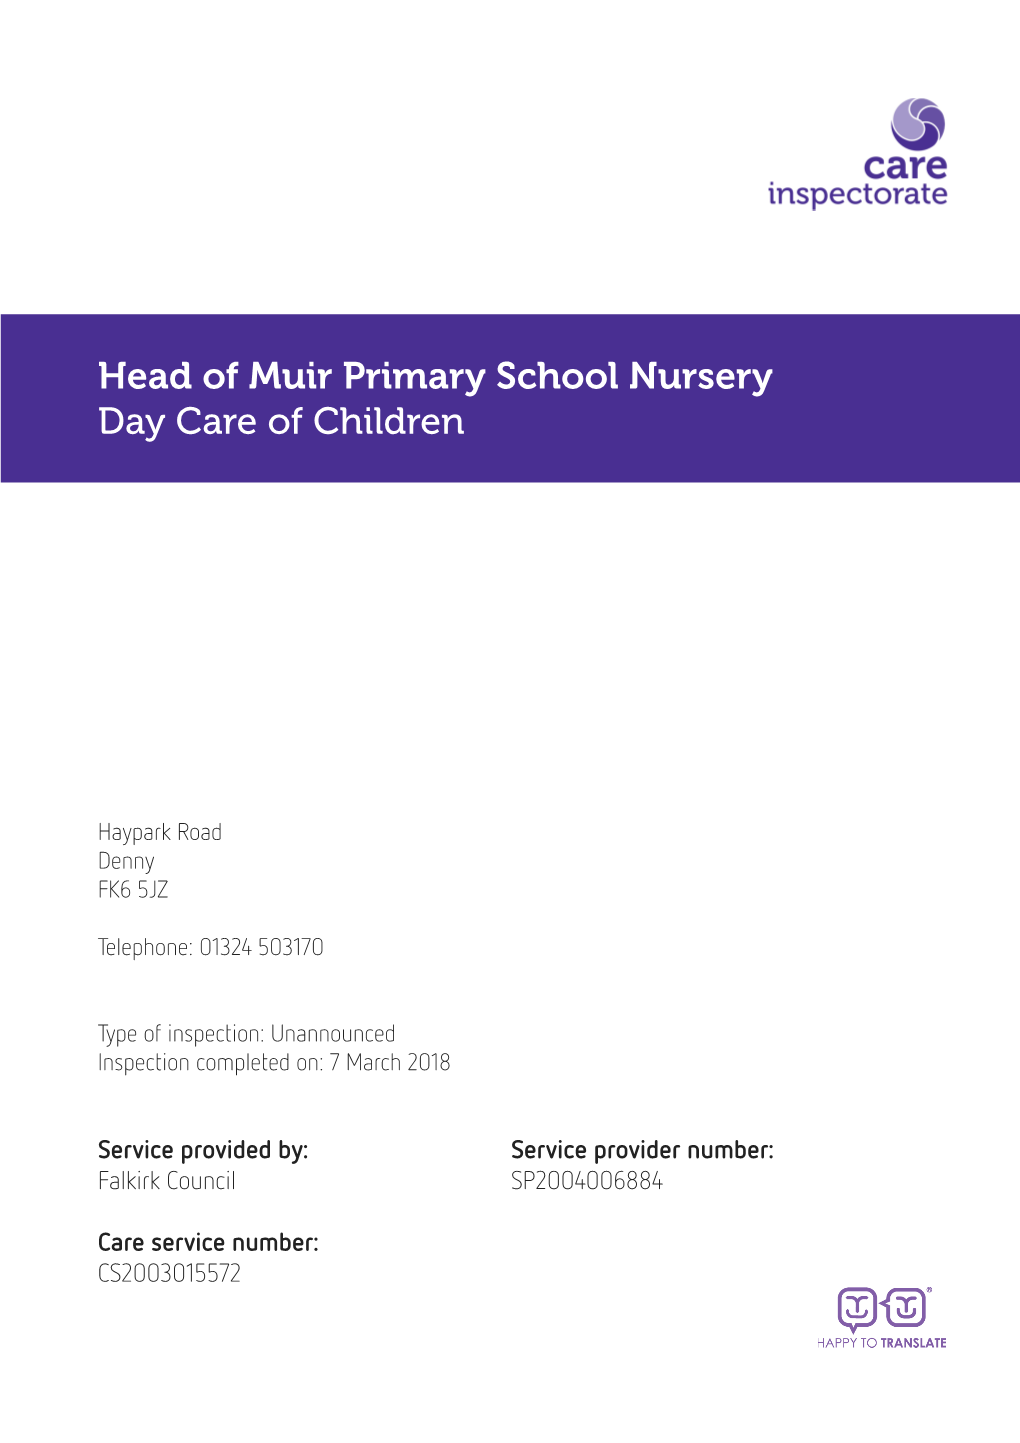 Head of Muir Primary School Nursery Day Care of Children